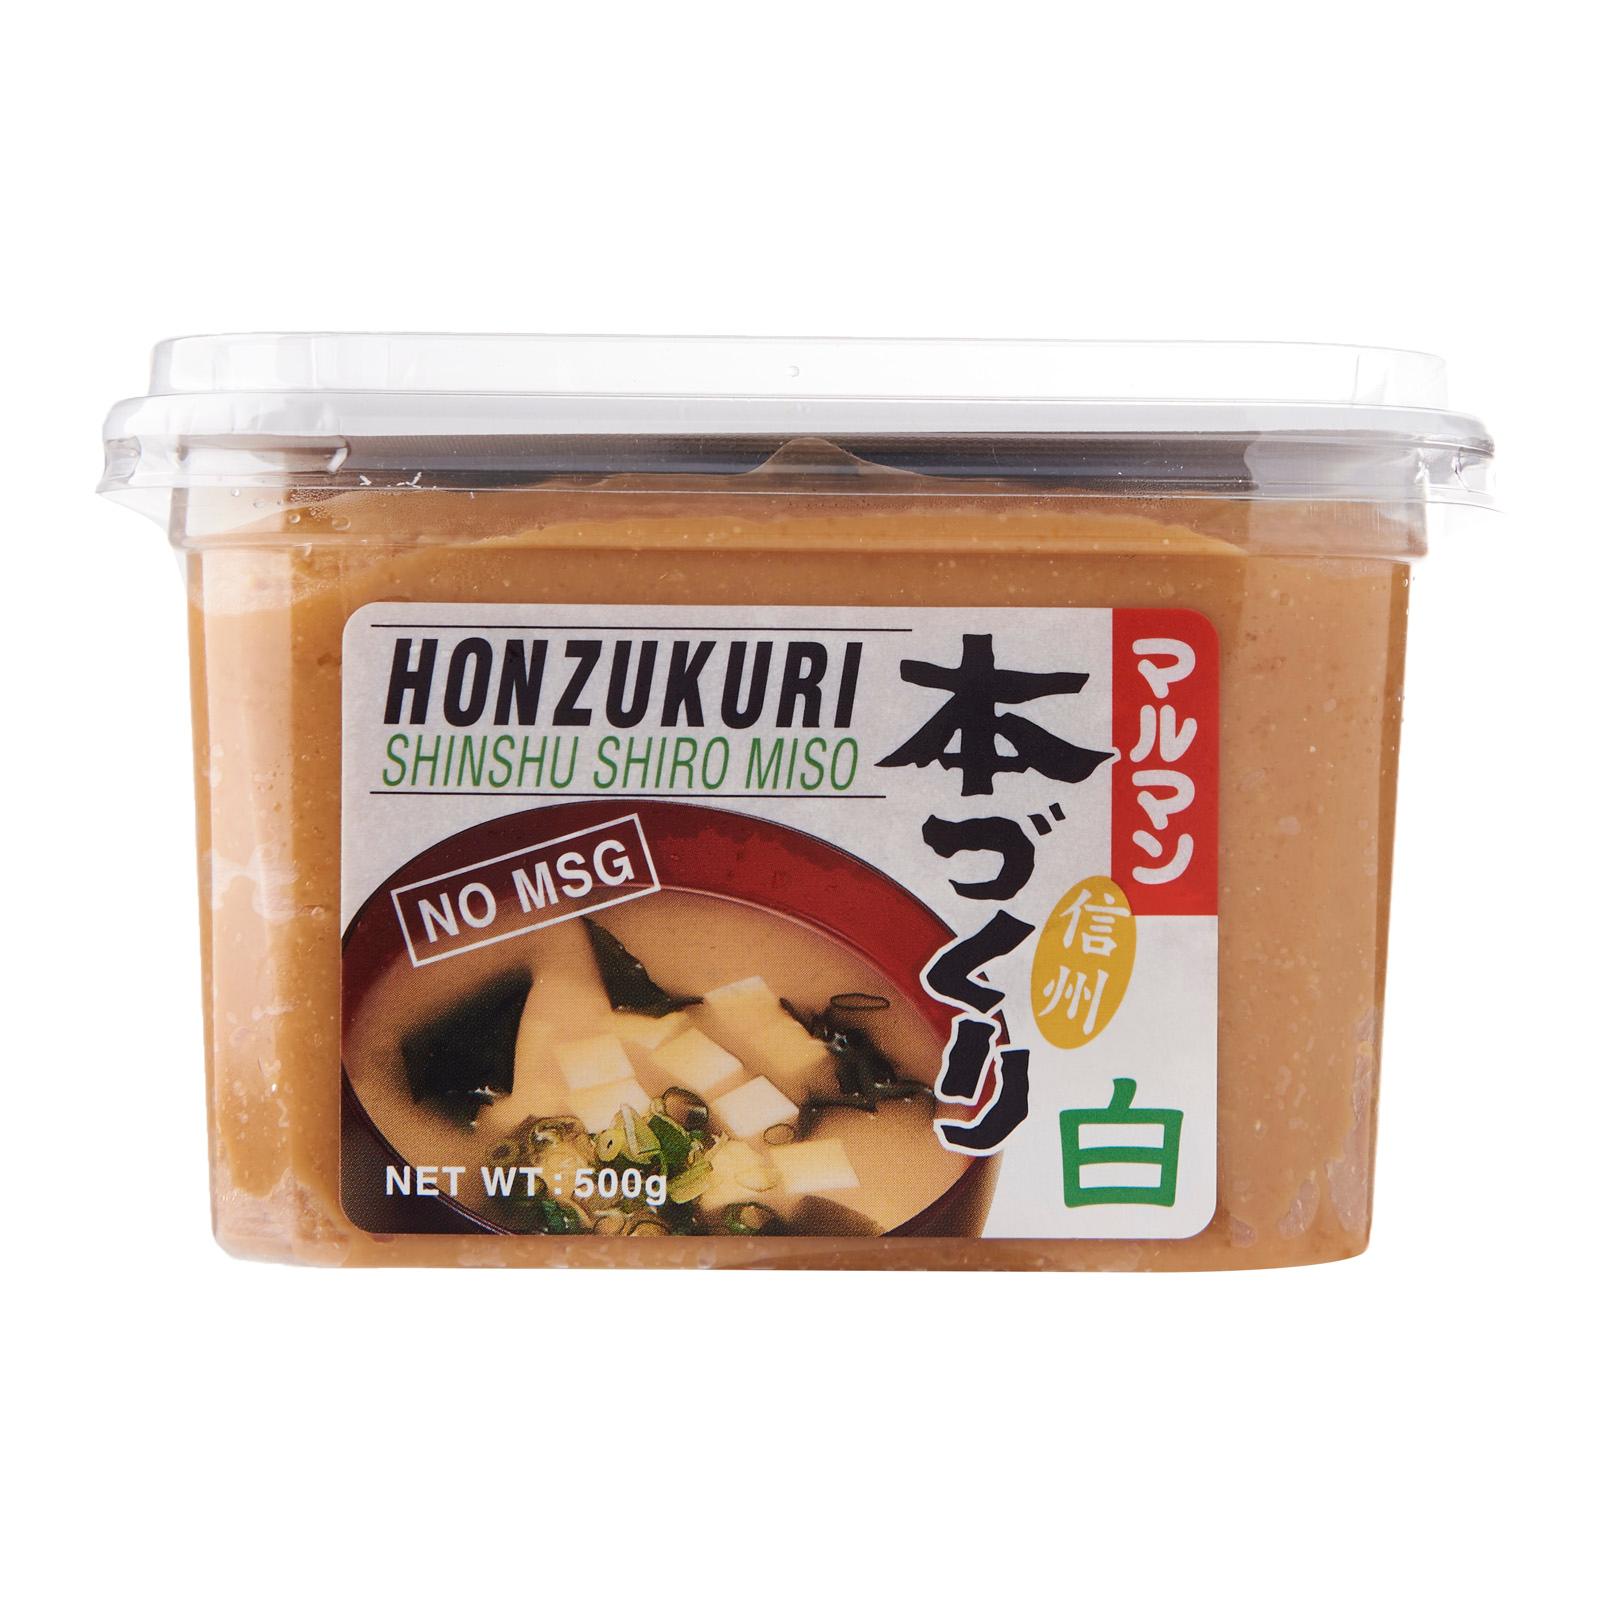 Maruman MSG Free Honzukuri Aka Miso Paste 750g Tub